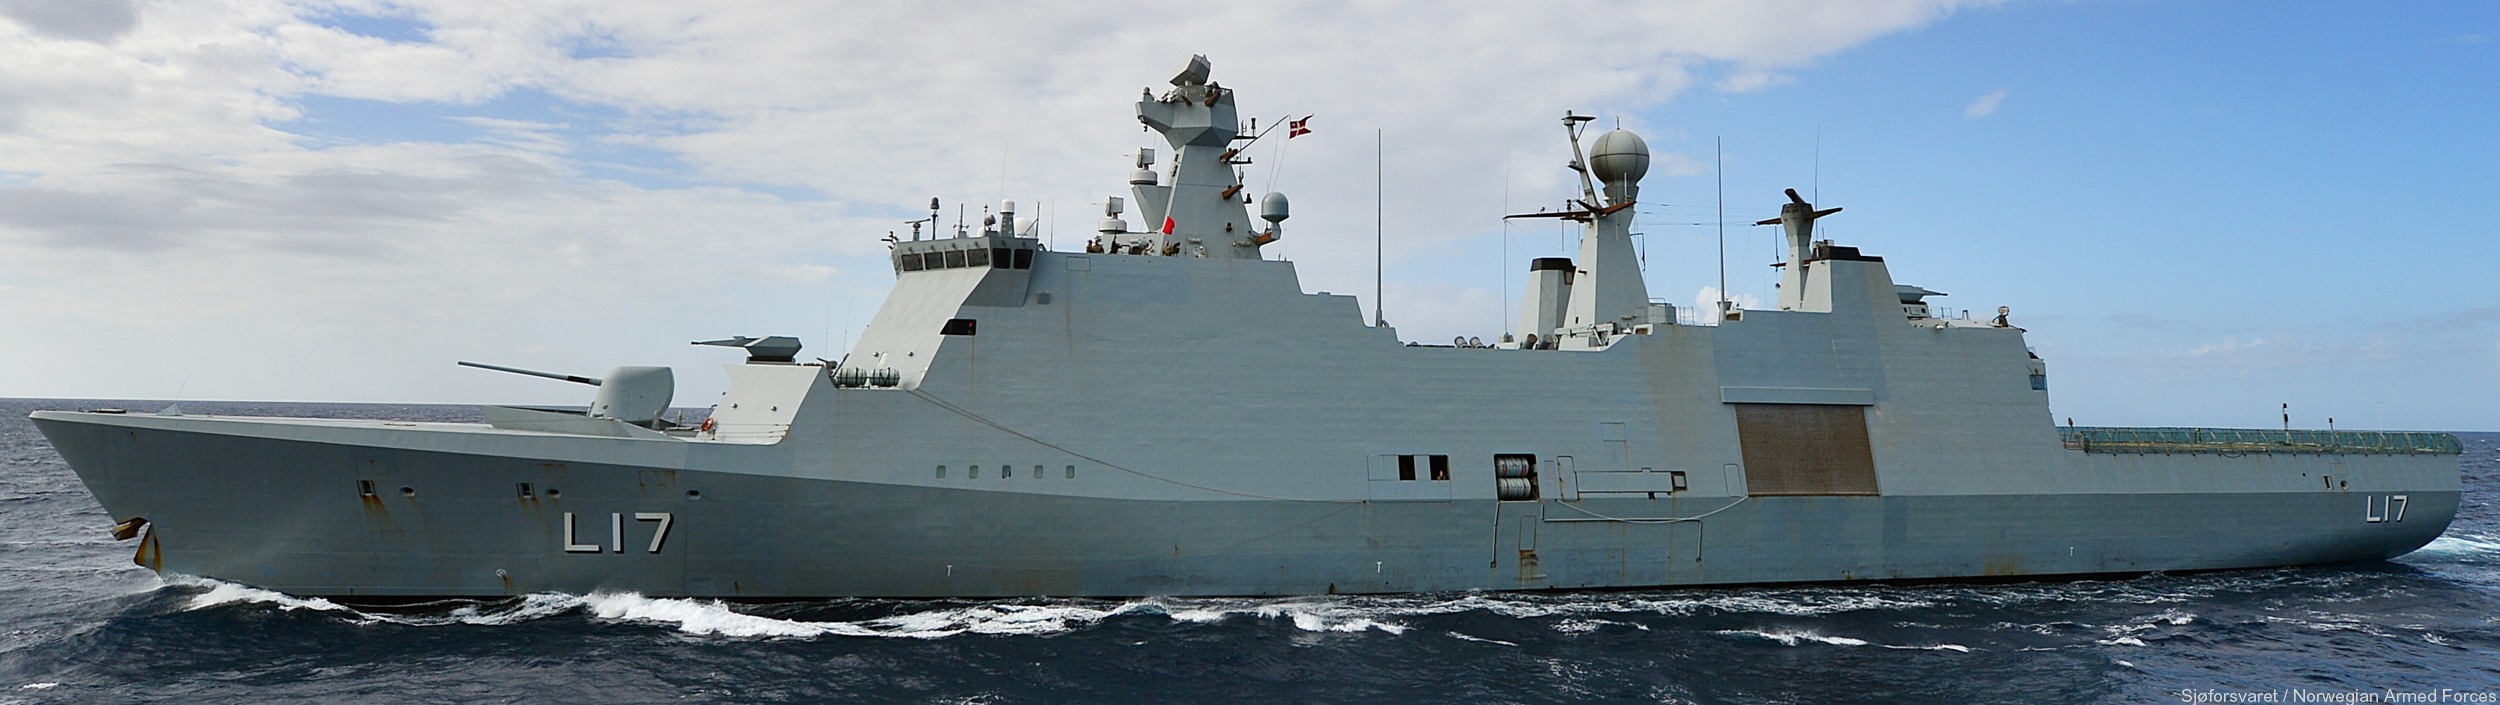 f-342 hdms esbern snare l-17 frigate command support ship royal danish navy 94